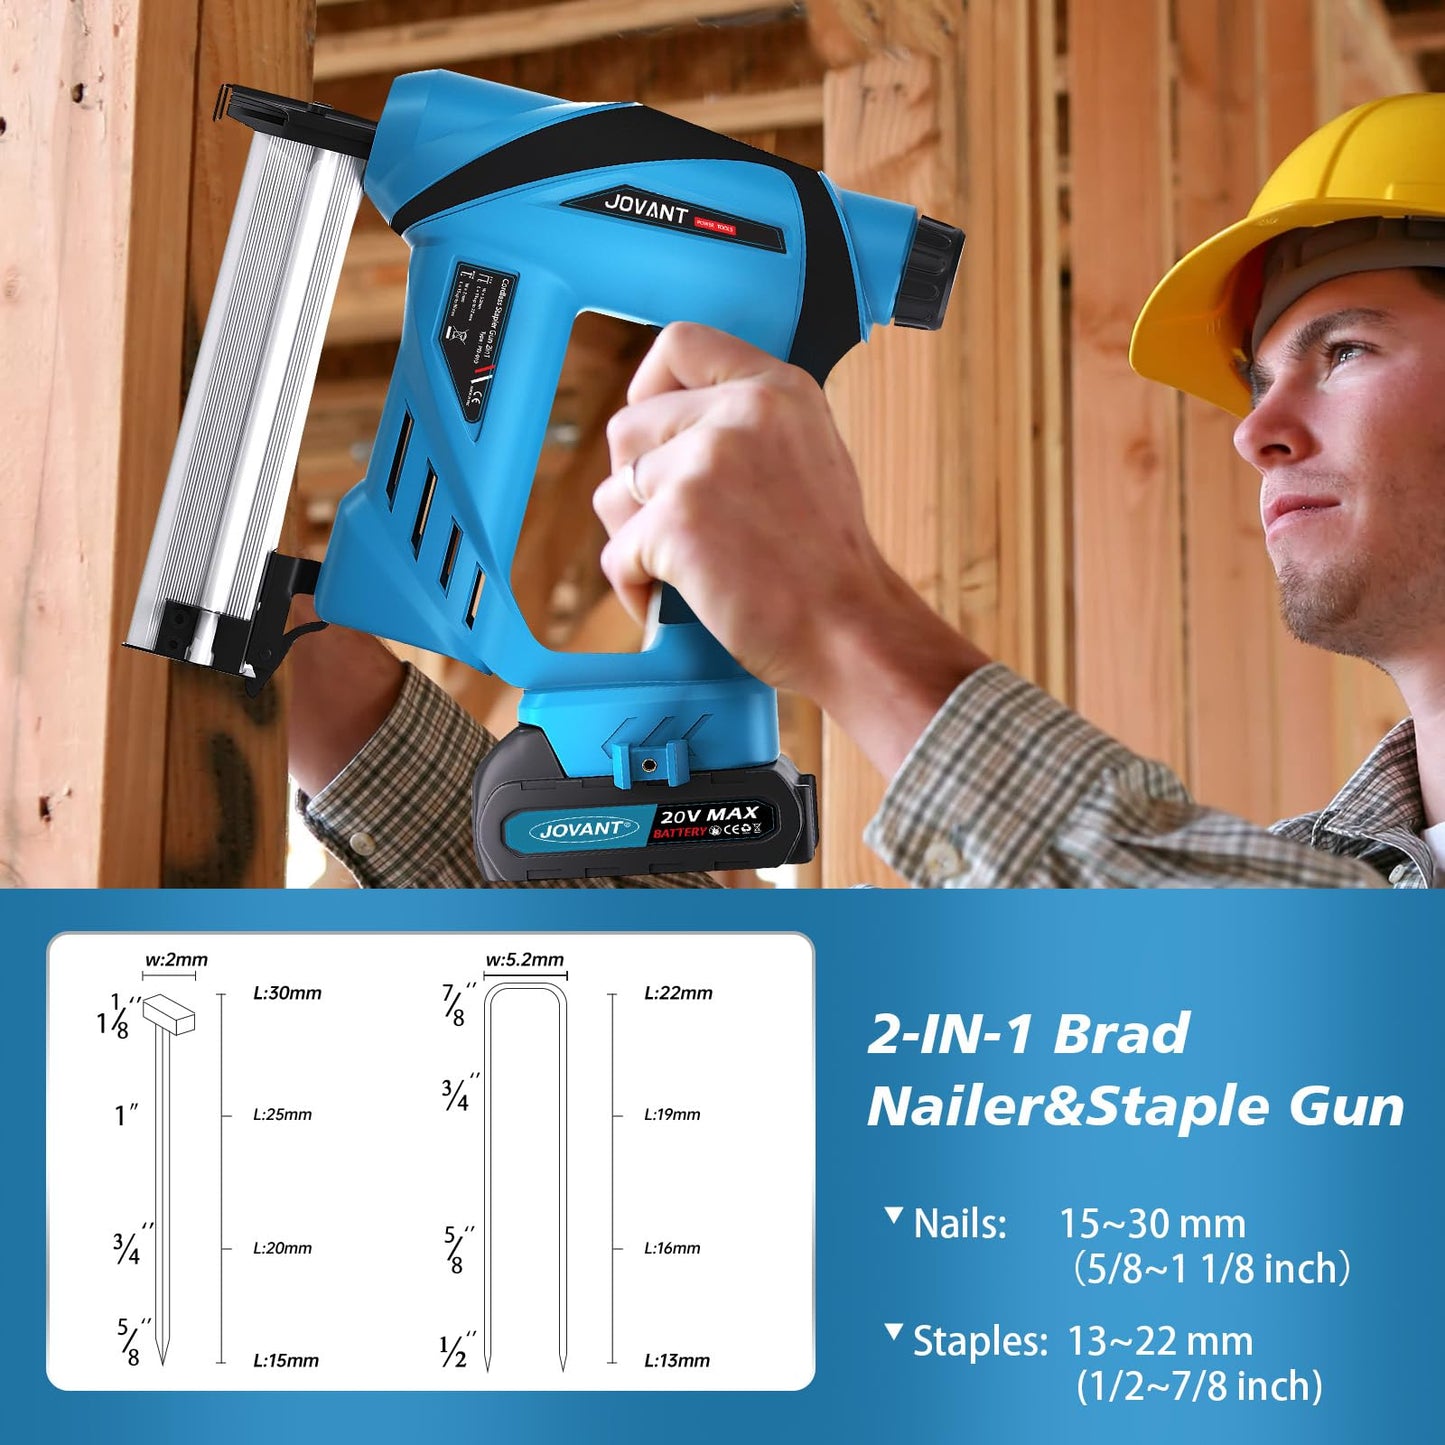 2-IN-1 Brad Nailer&Staple Gun Nails: 15~30 mm (5/8~1 1/8 inch) ' Staples: 13~22 mm (1/2~7/8 inch)